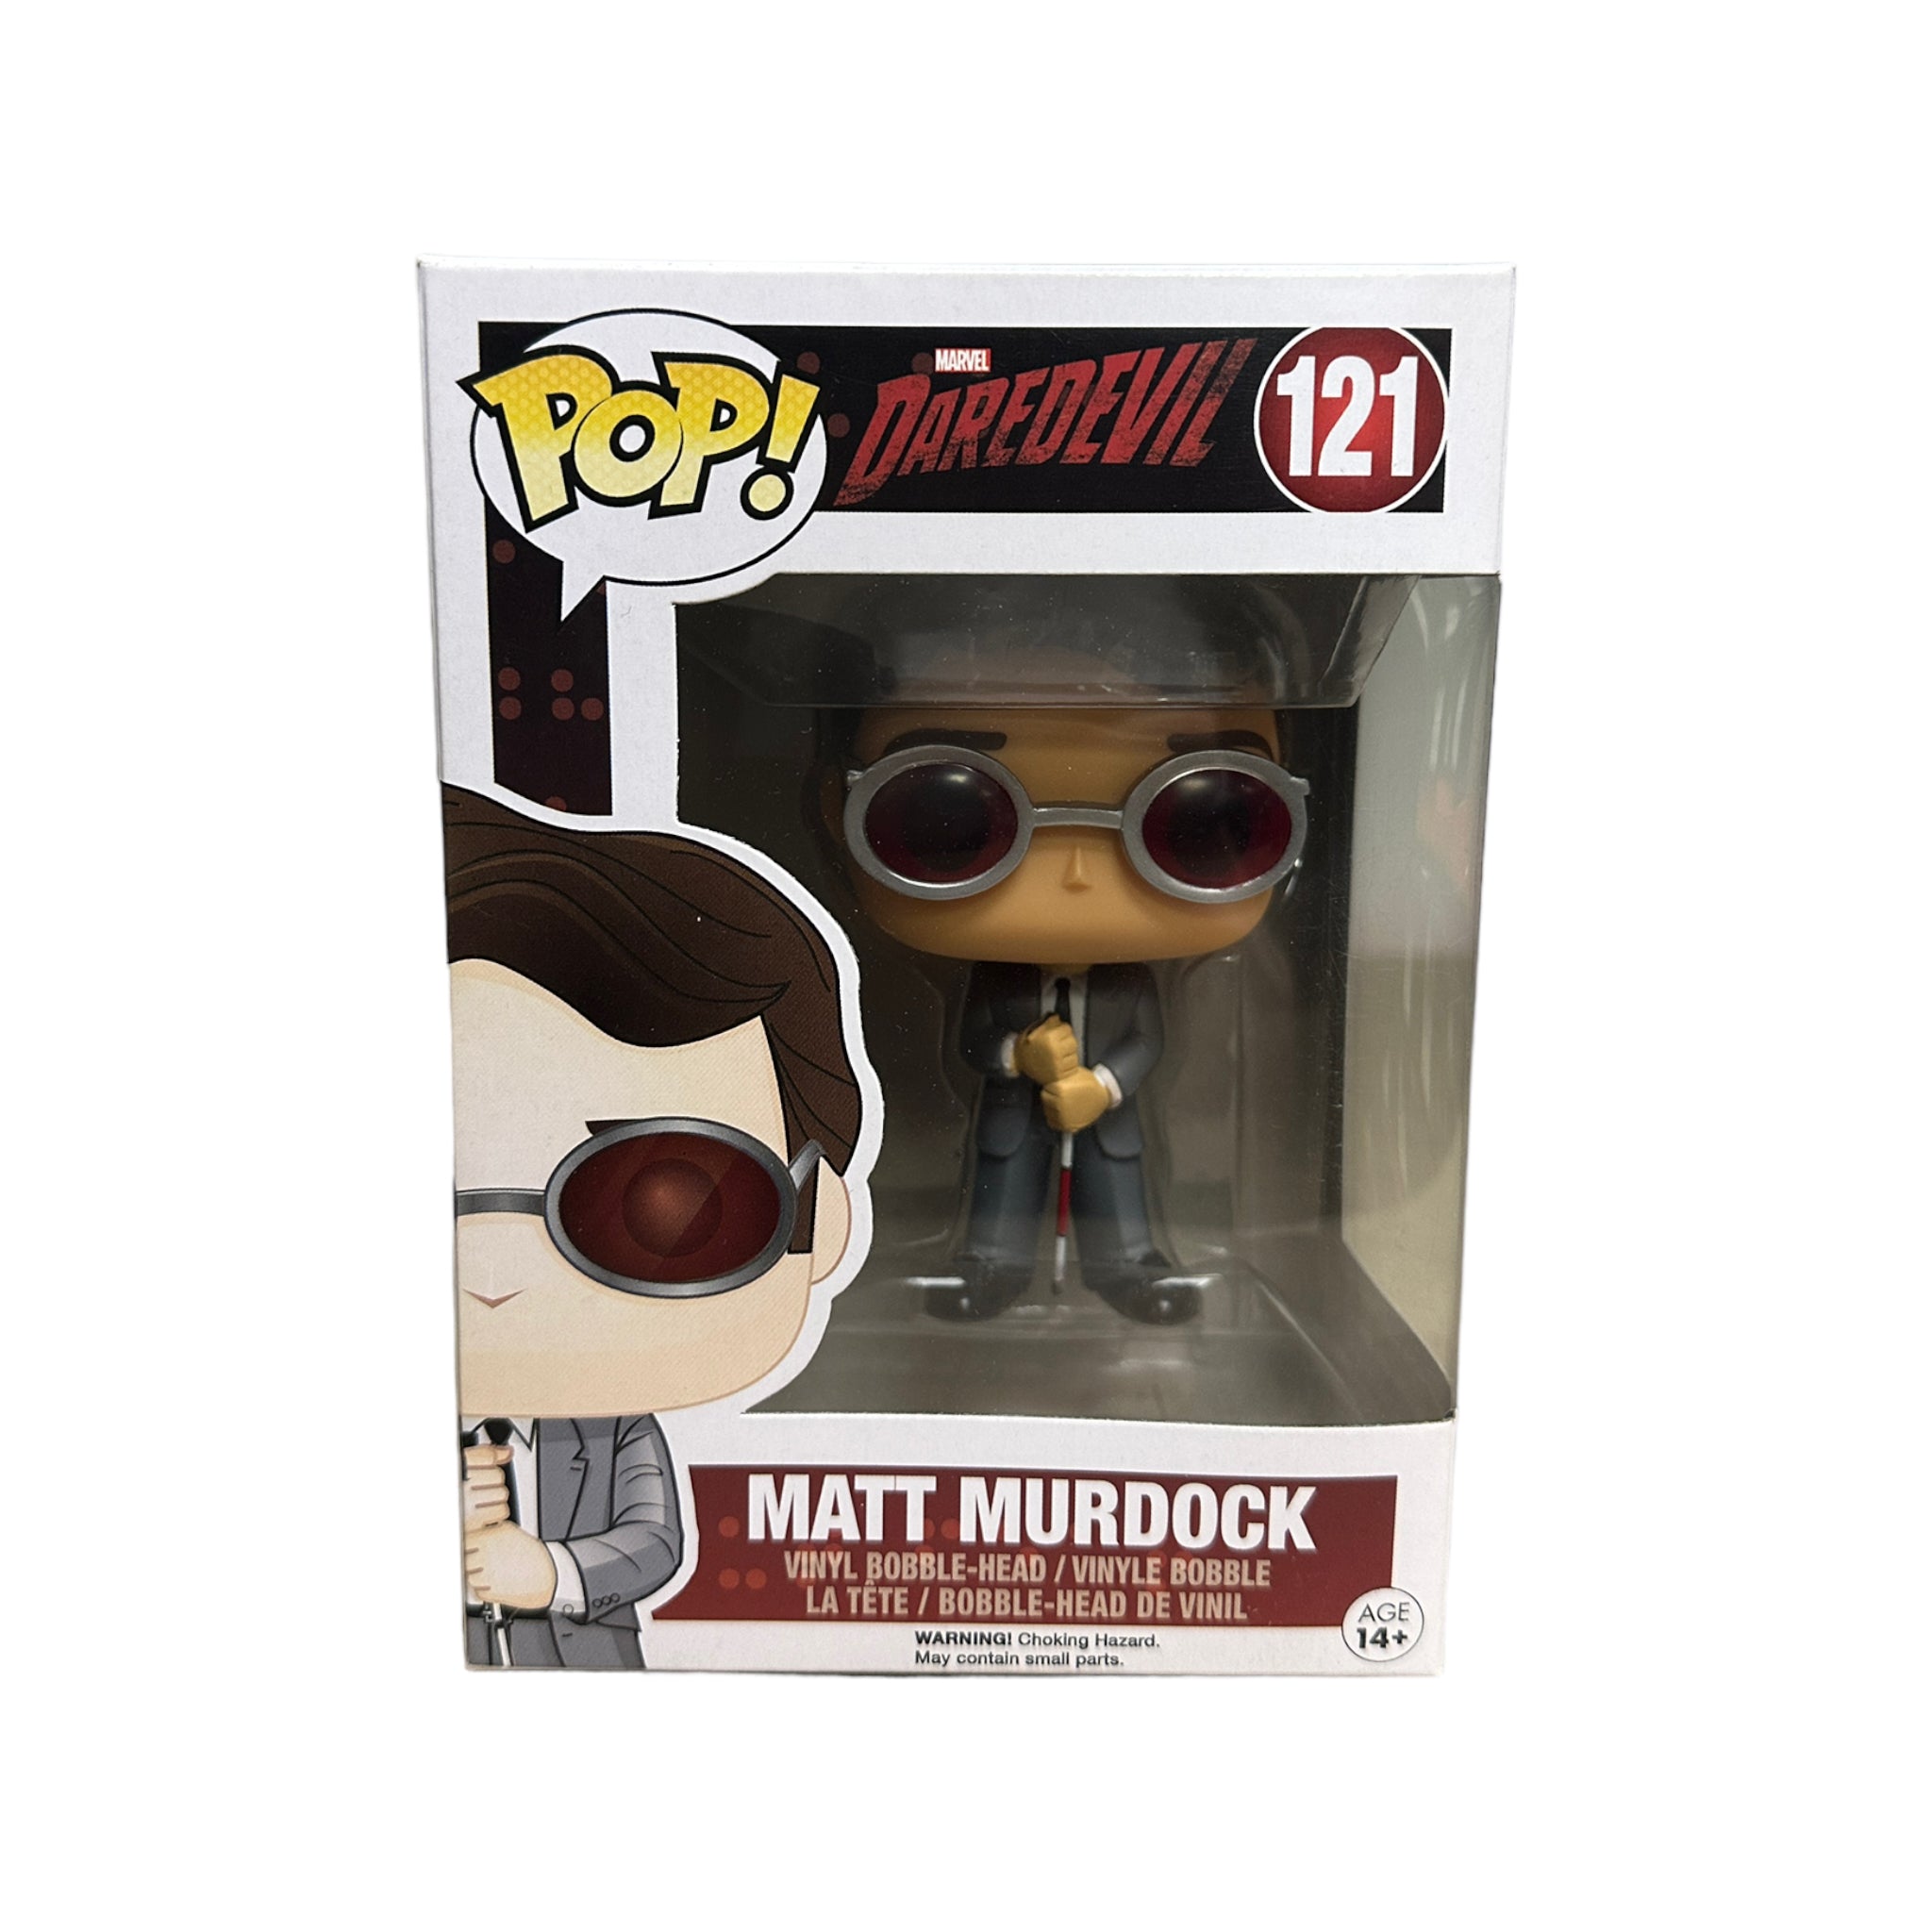 Matt Murdock #121 Funko Pop! - Daredevil - 2015 Pop! - Condition 8.75/10